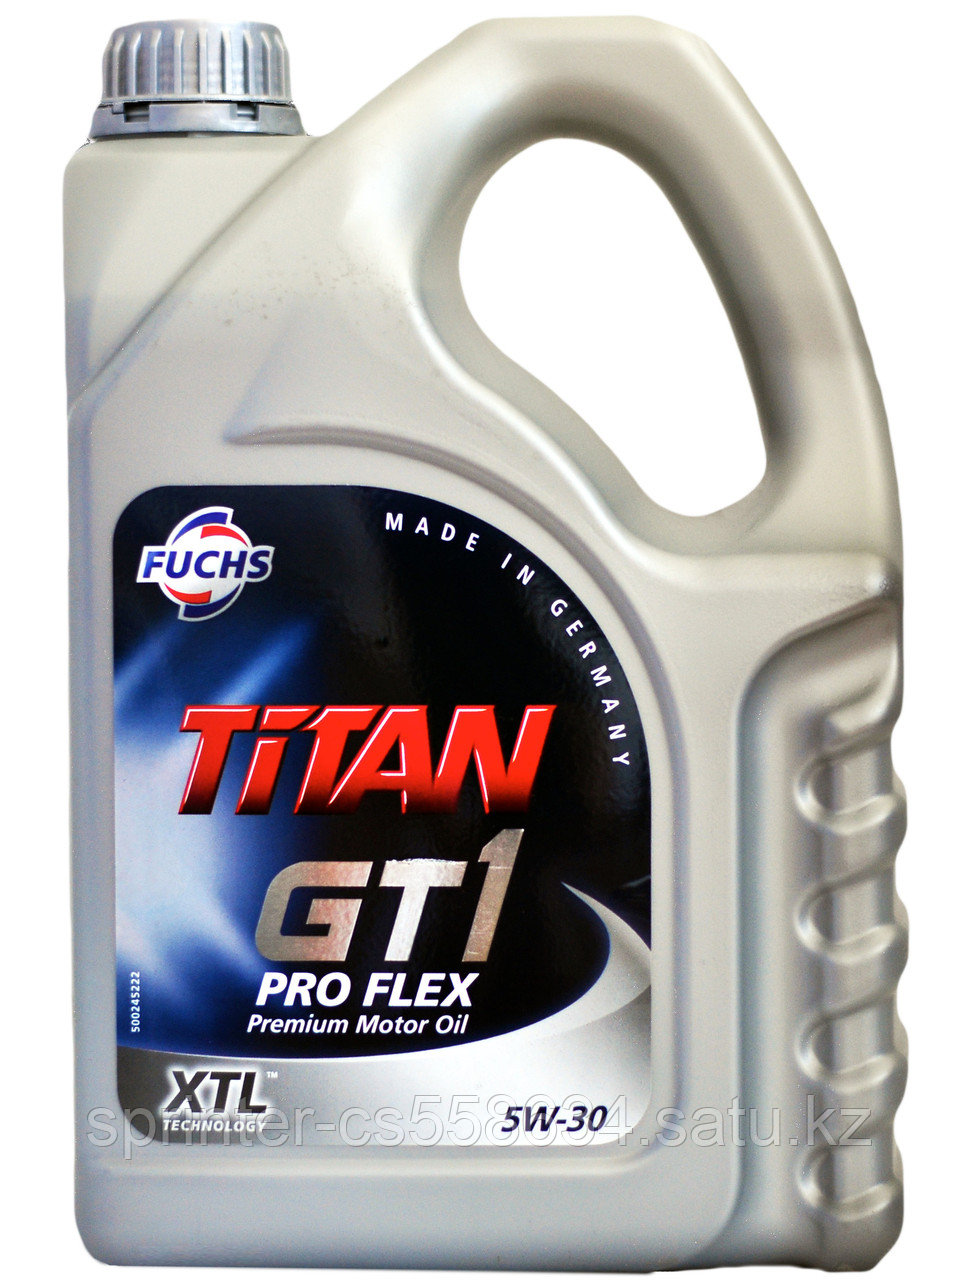 Моторное масло TITAN GT1 PRO FLEX 5w30 5 литров